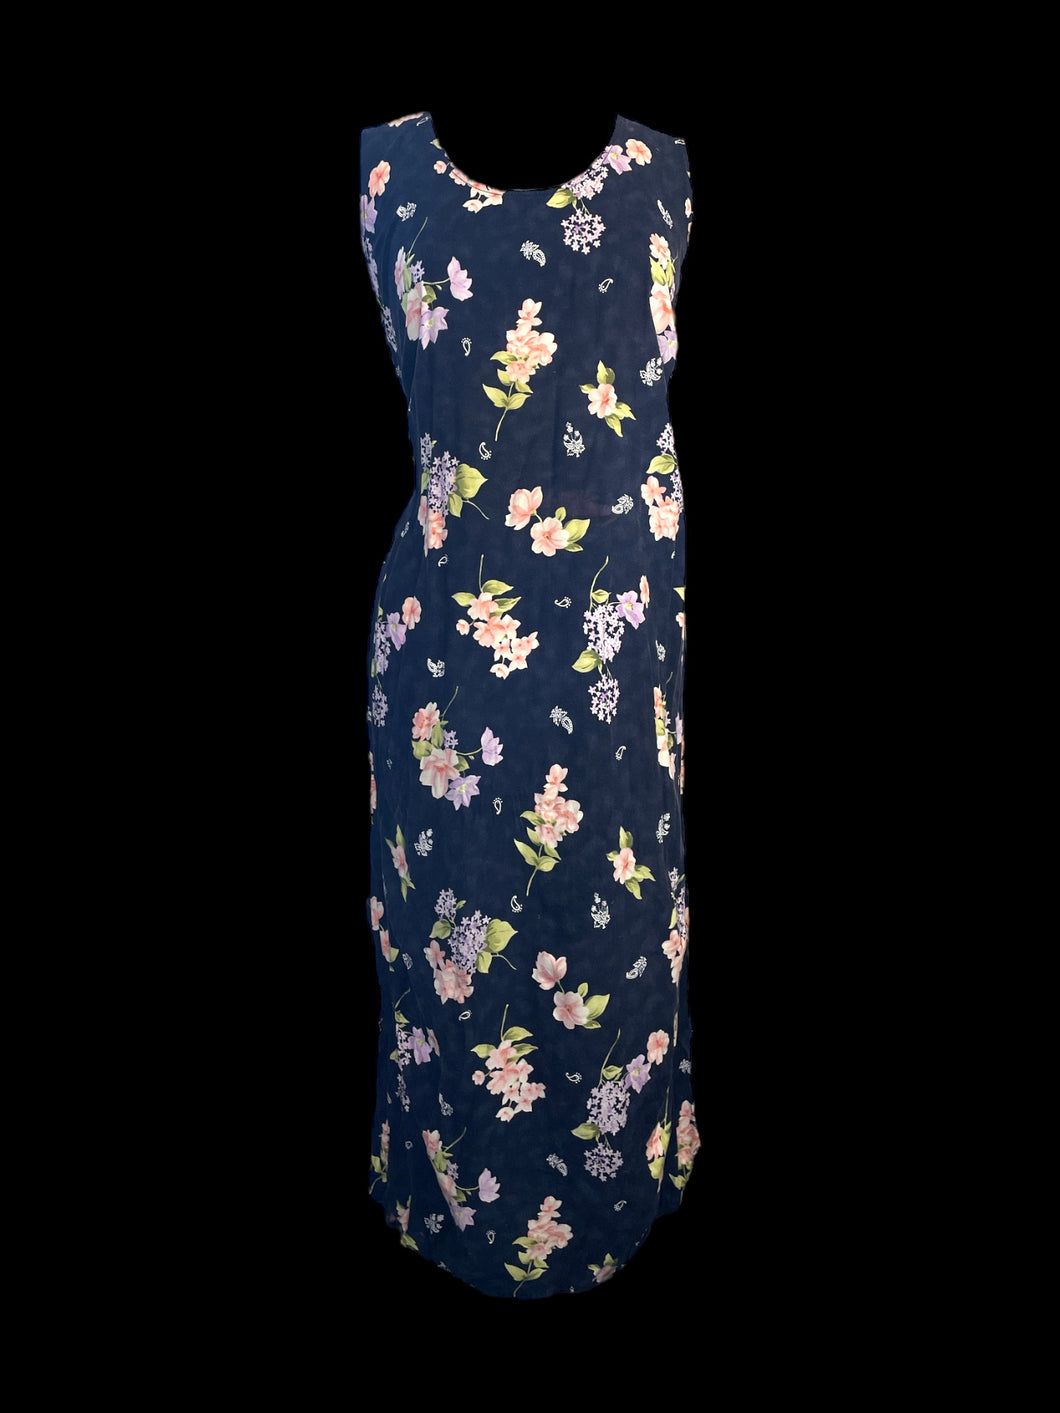 1X Dark blue, pink, & green floral & white paisley sleeveless dress w/ side hem slits